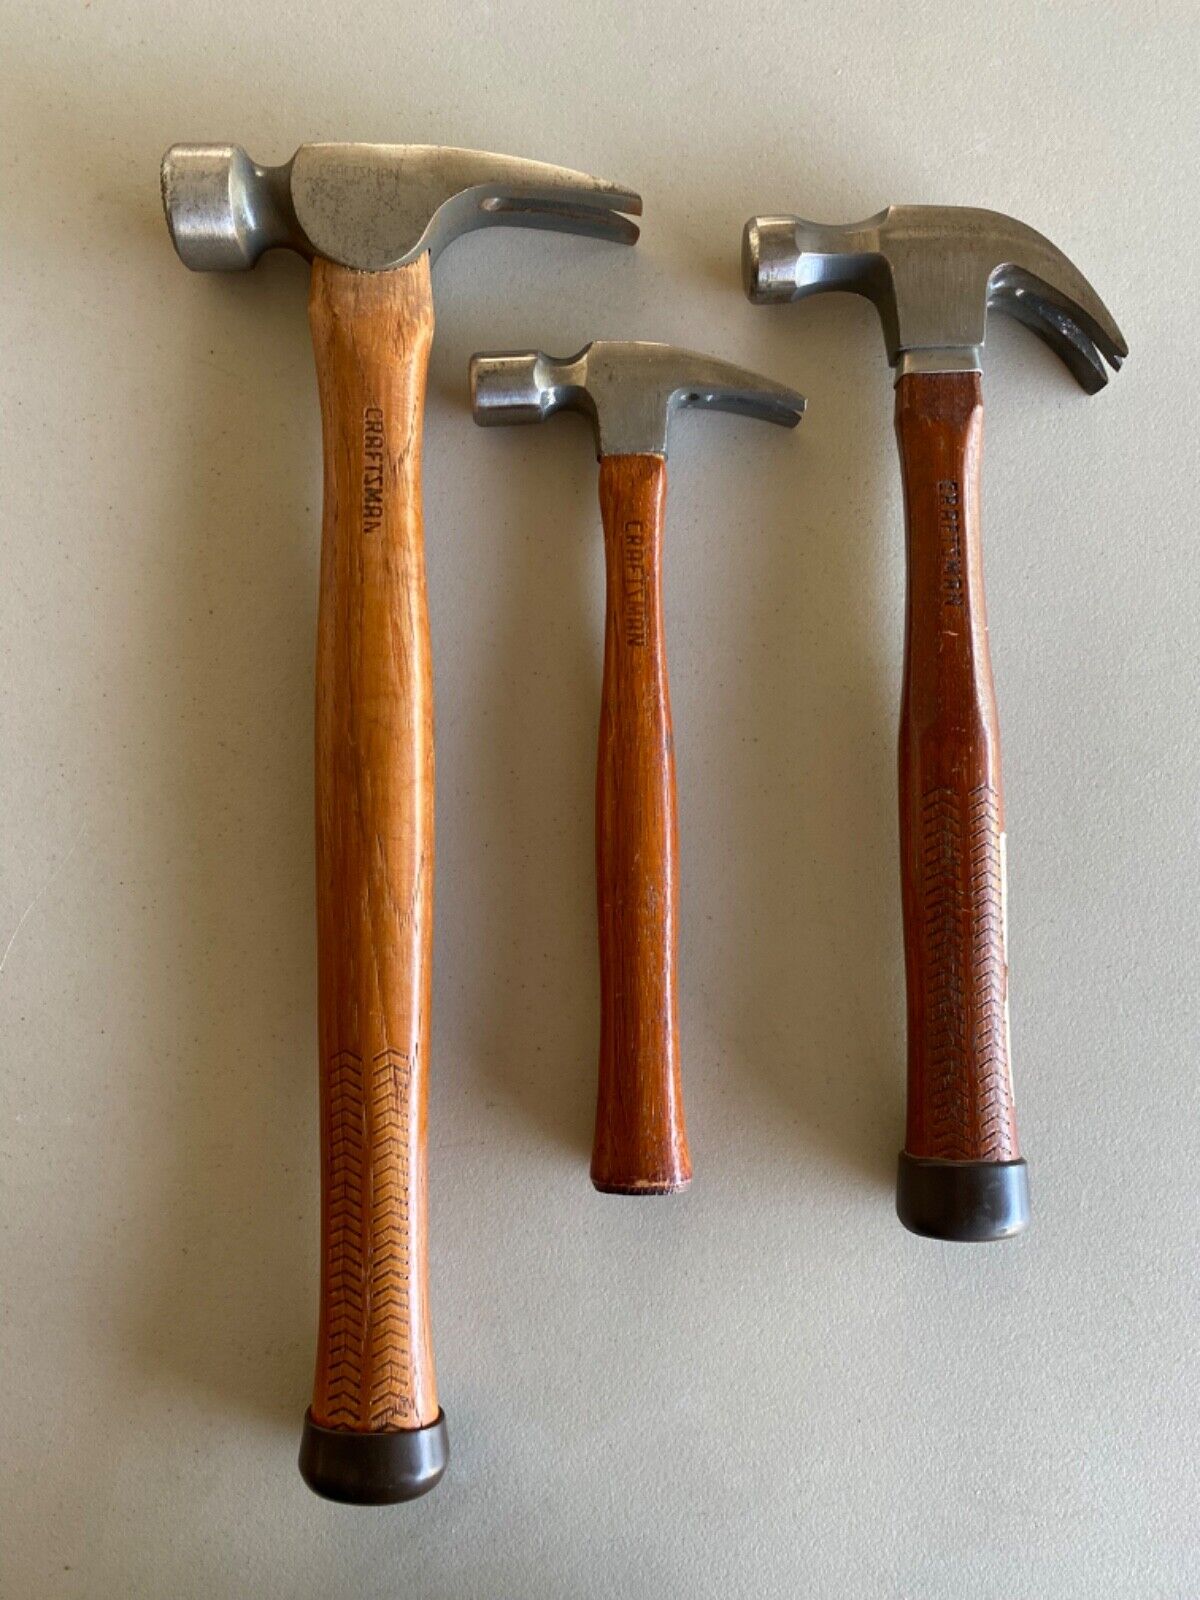 New Craftsman Professional Hammer Group